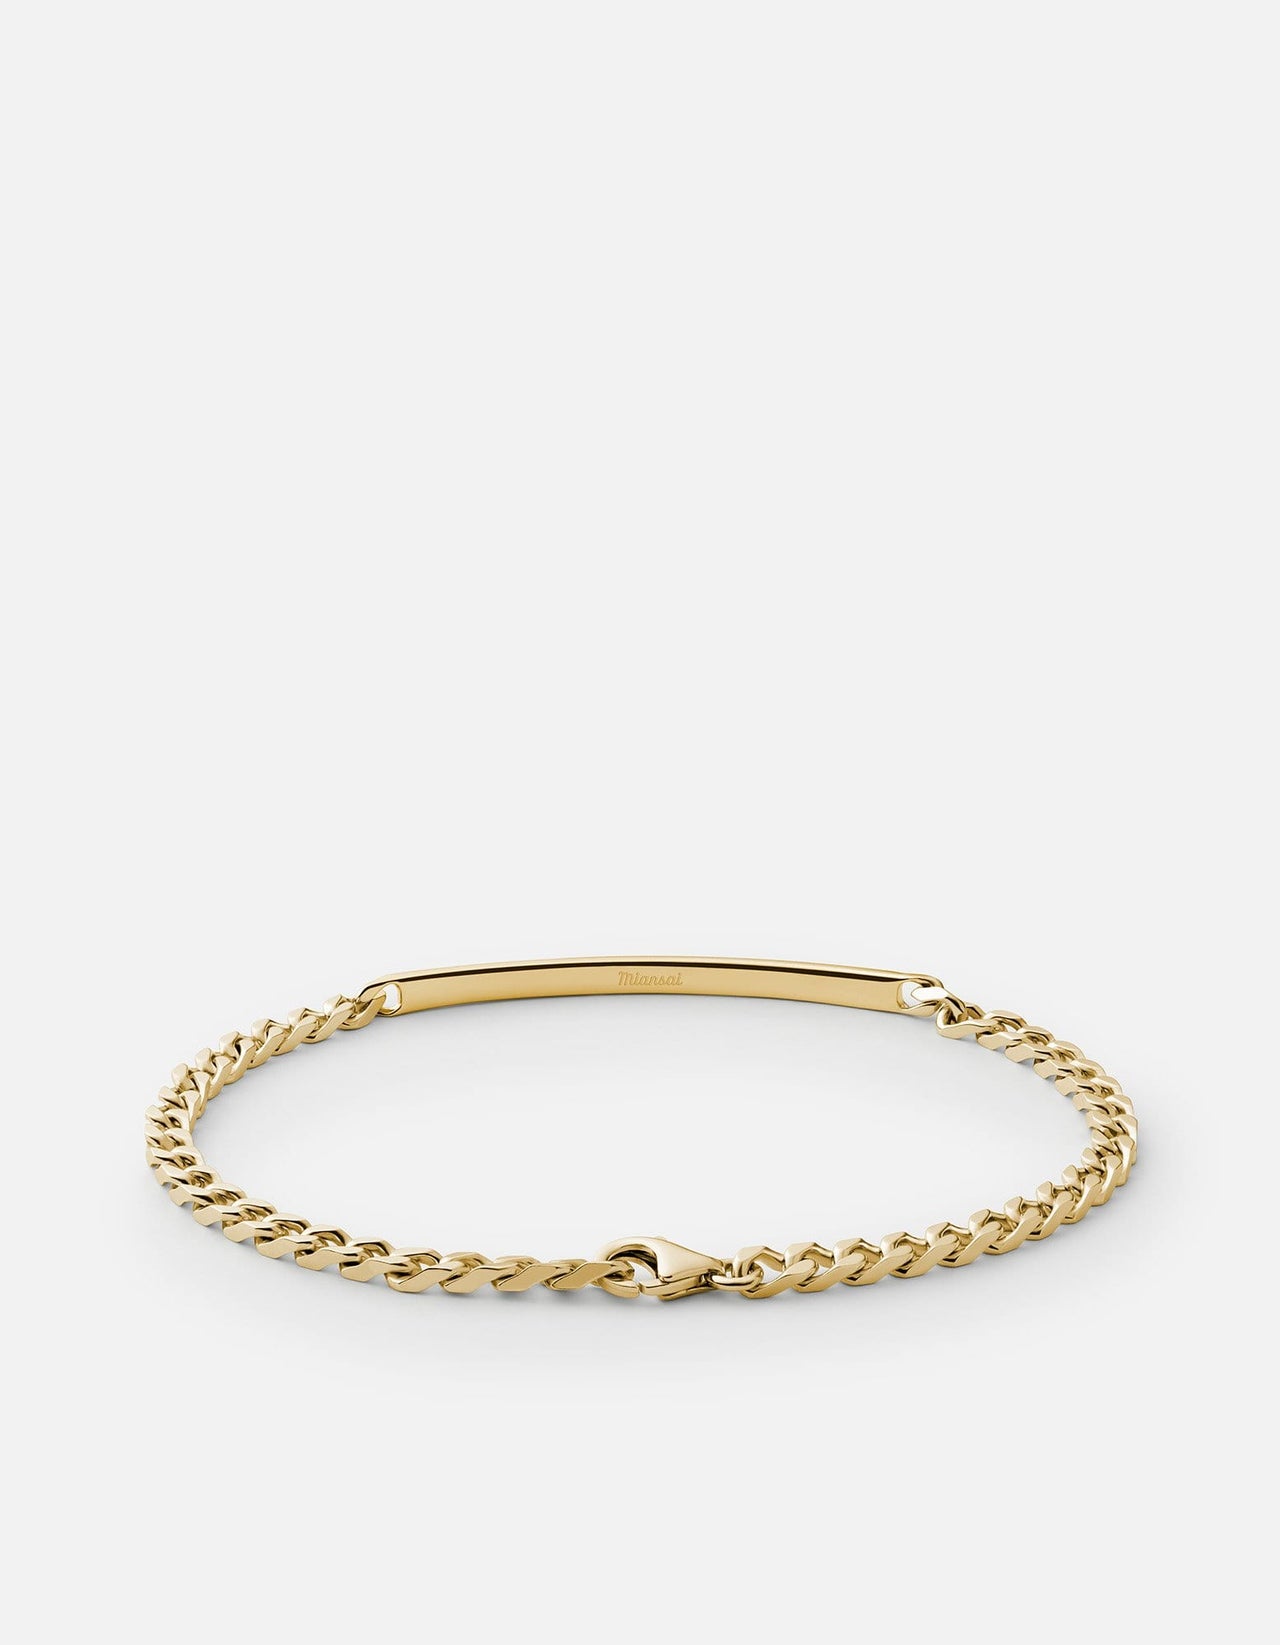 9ct Gold ladies Sienna bracelet